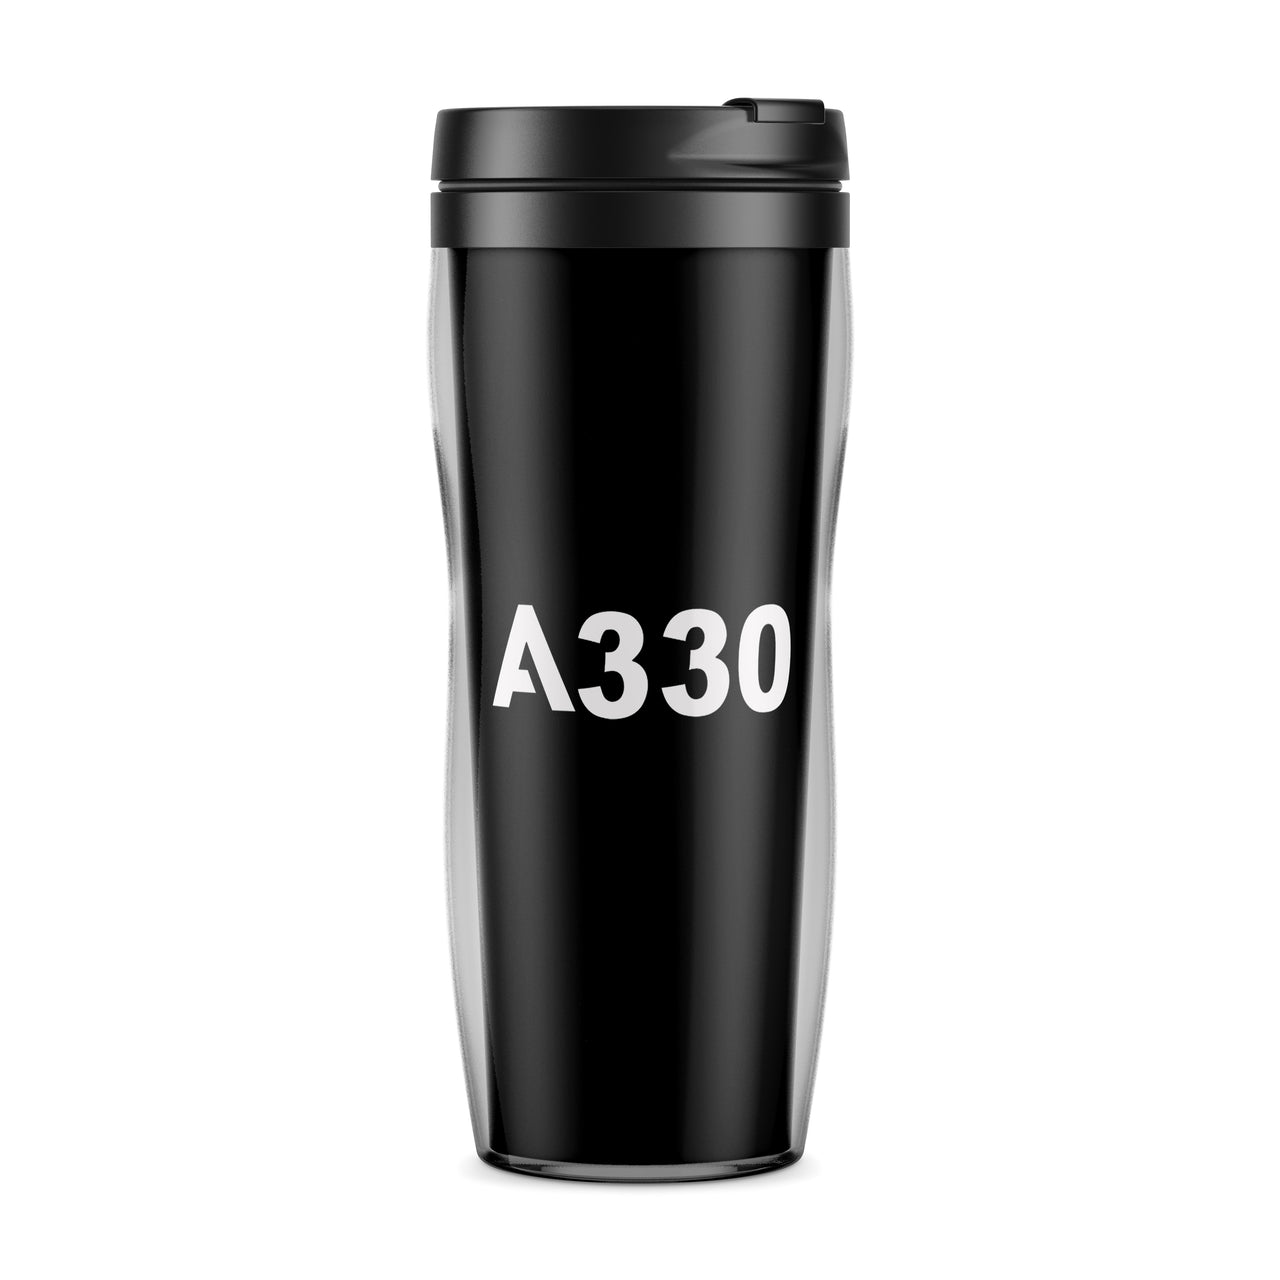 A330 Flat Text Designed Travel Mugs